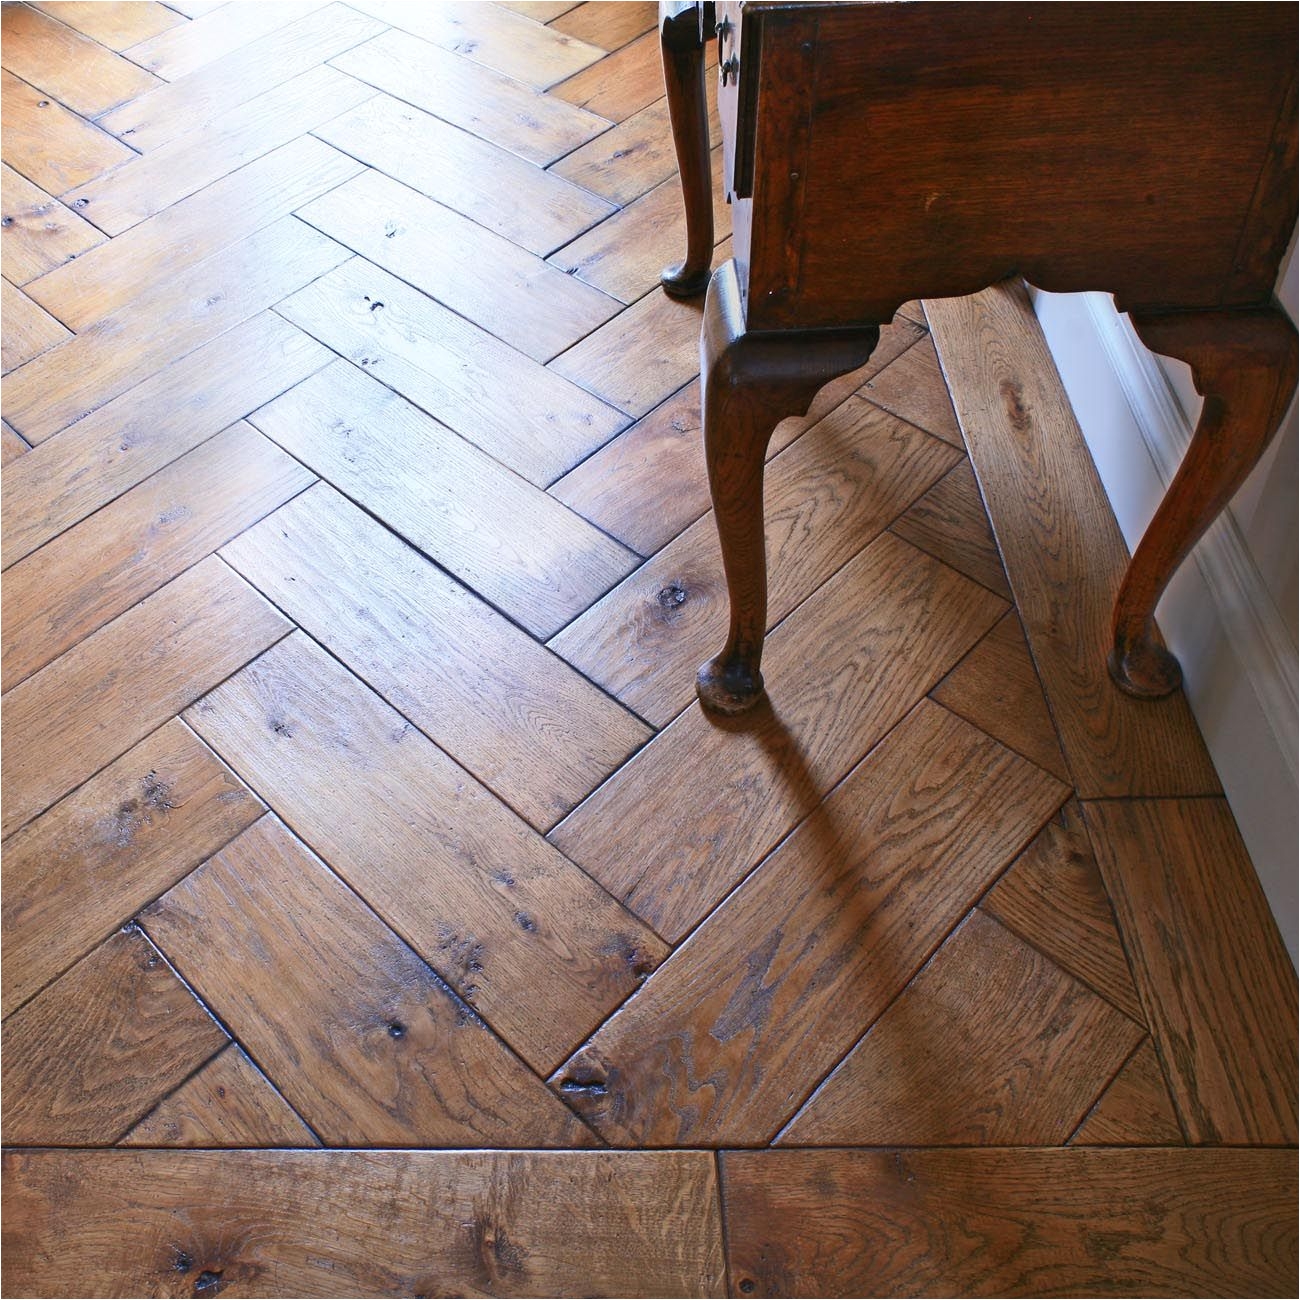 aged oak flooring from generations